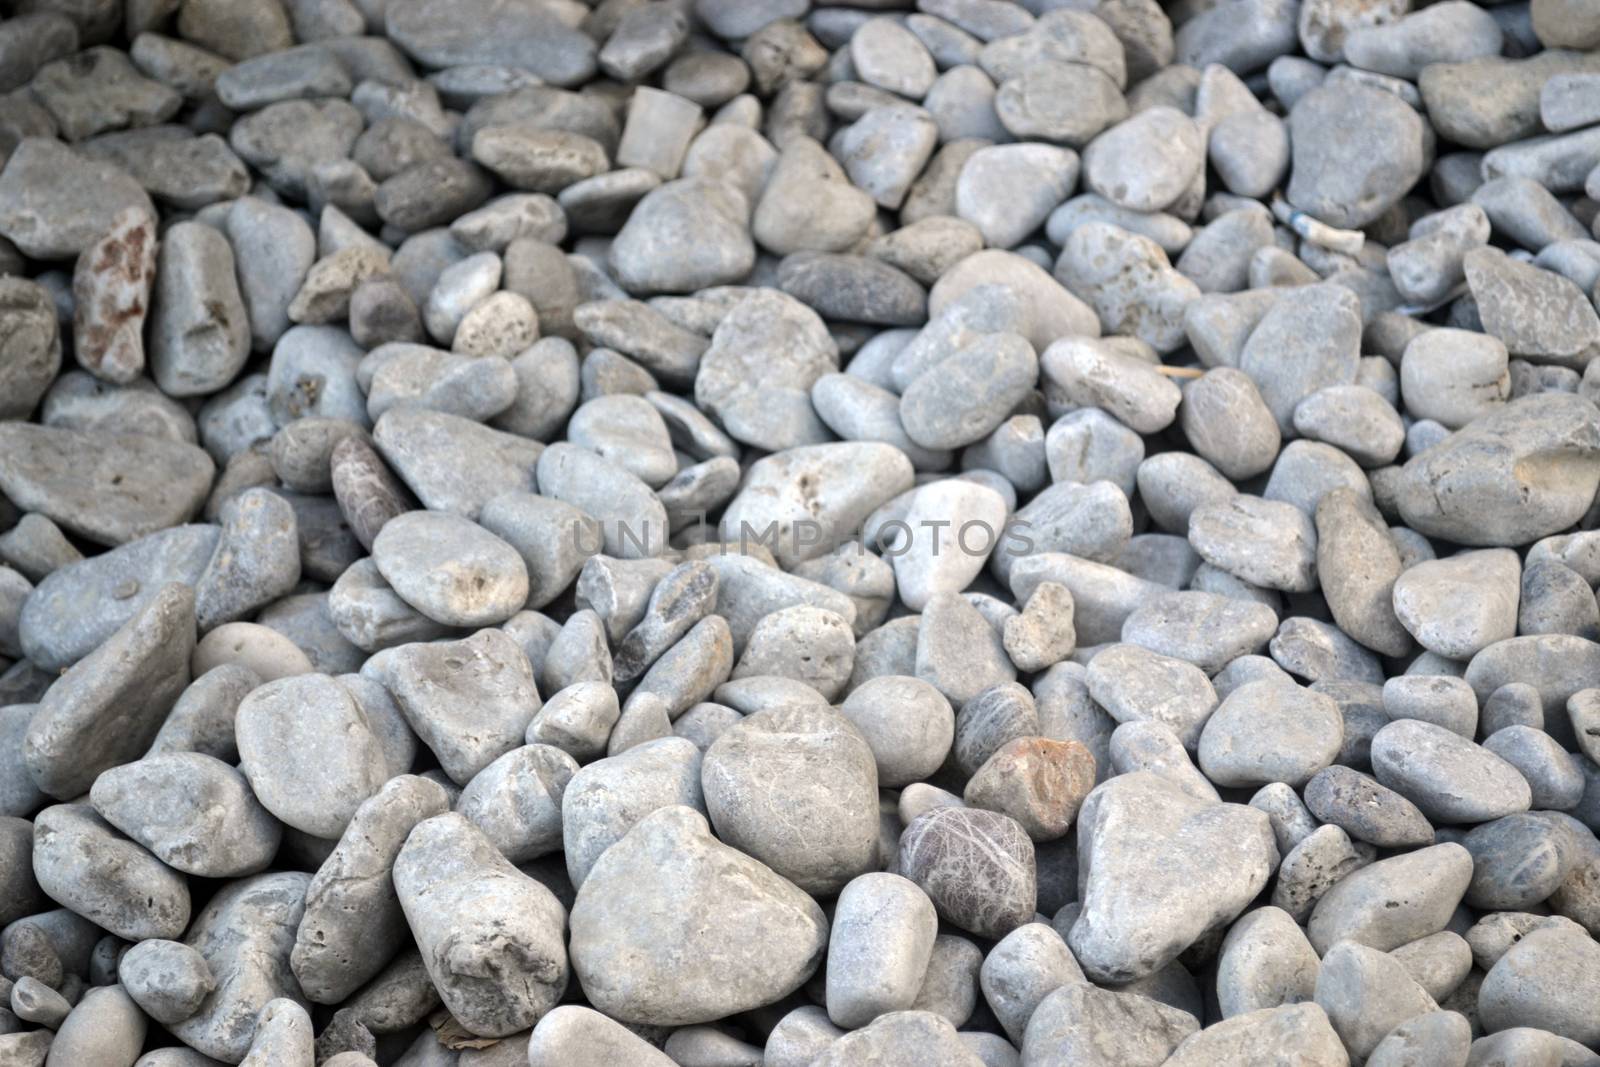 Backround of nice grey pebble stones with interesting shape